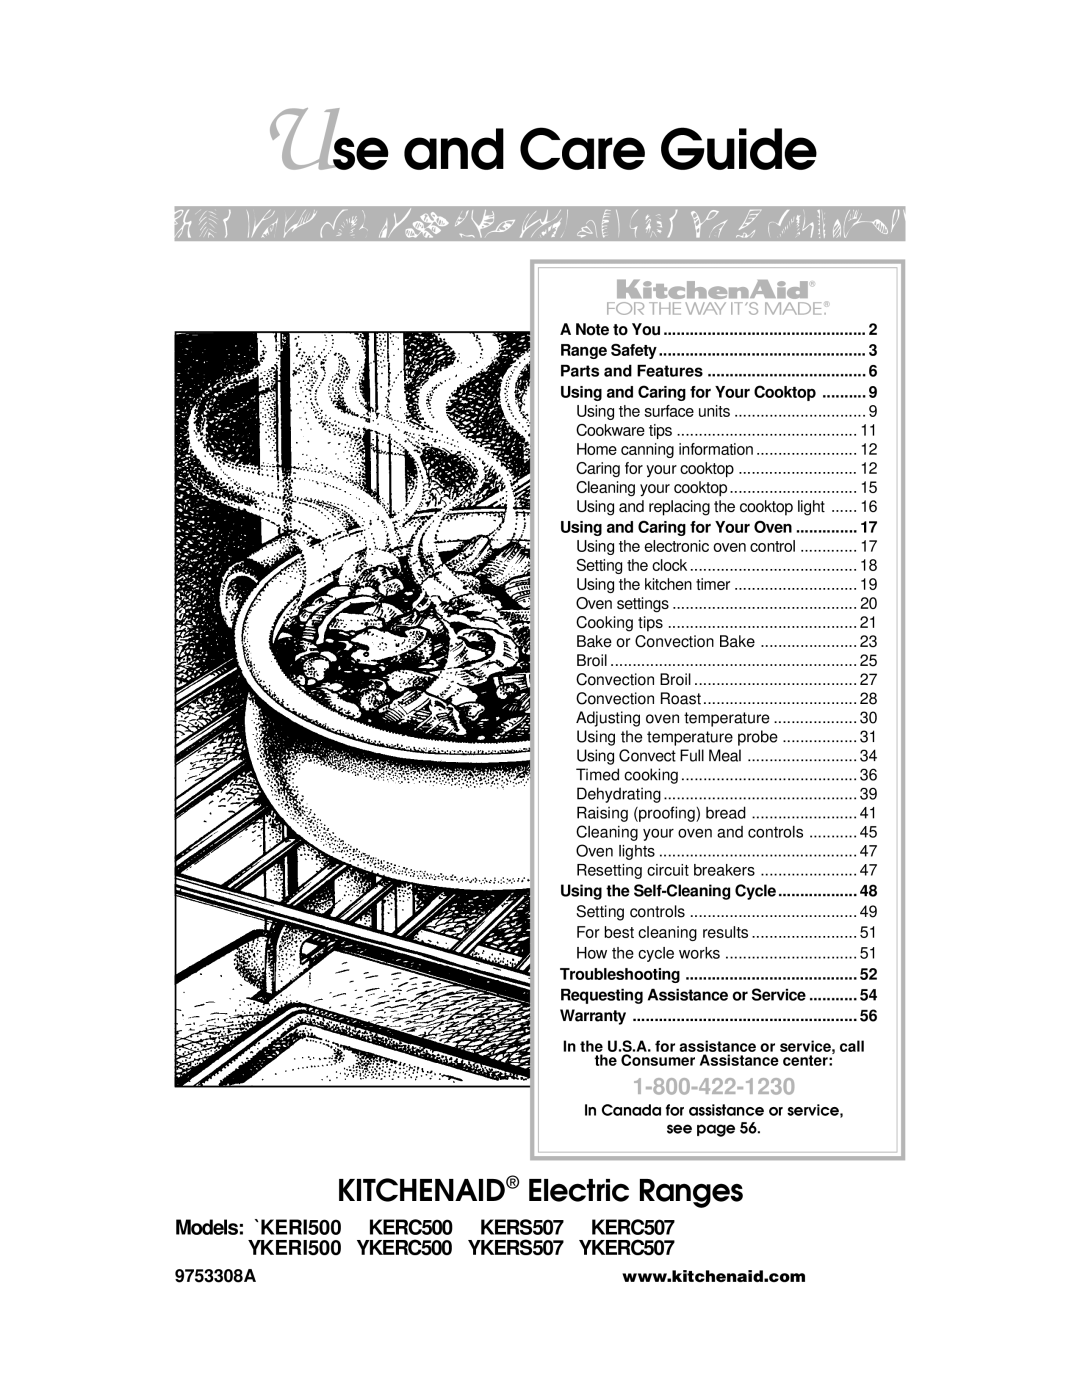 KitchenAid YKERC500, YKERI500 warranty Use and Care Guide, 9753308A 